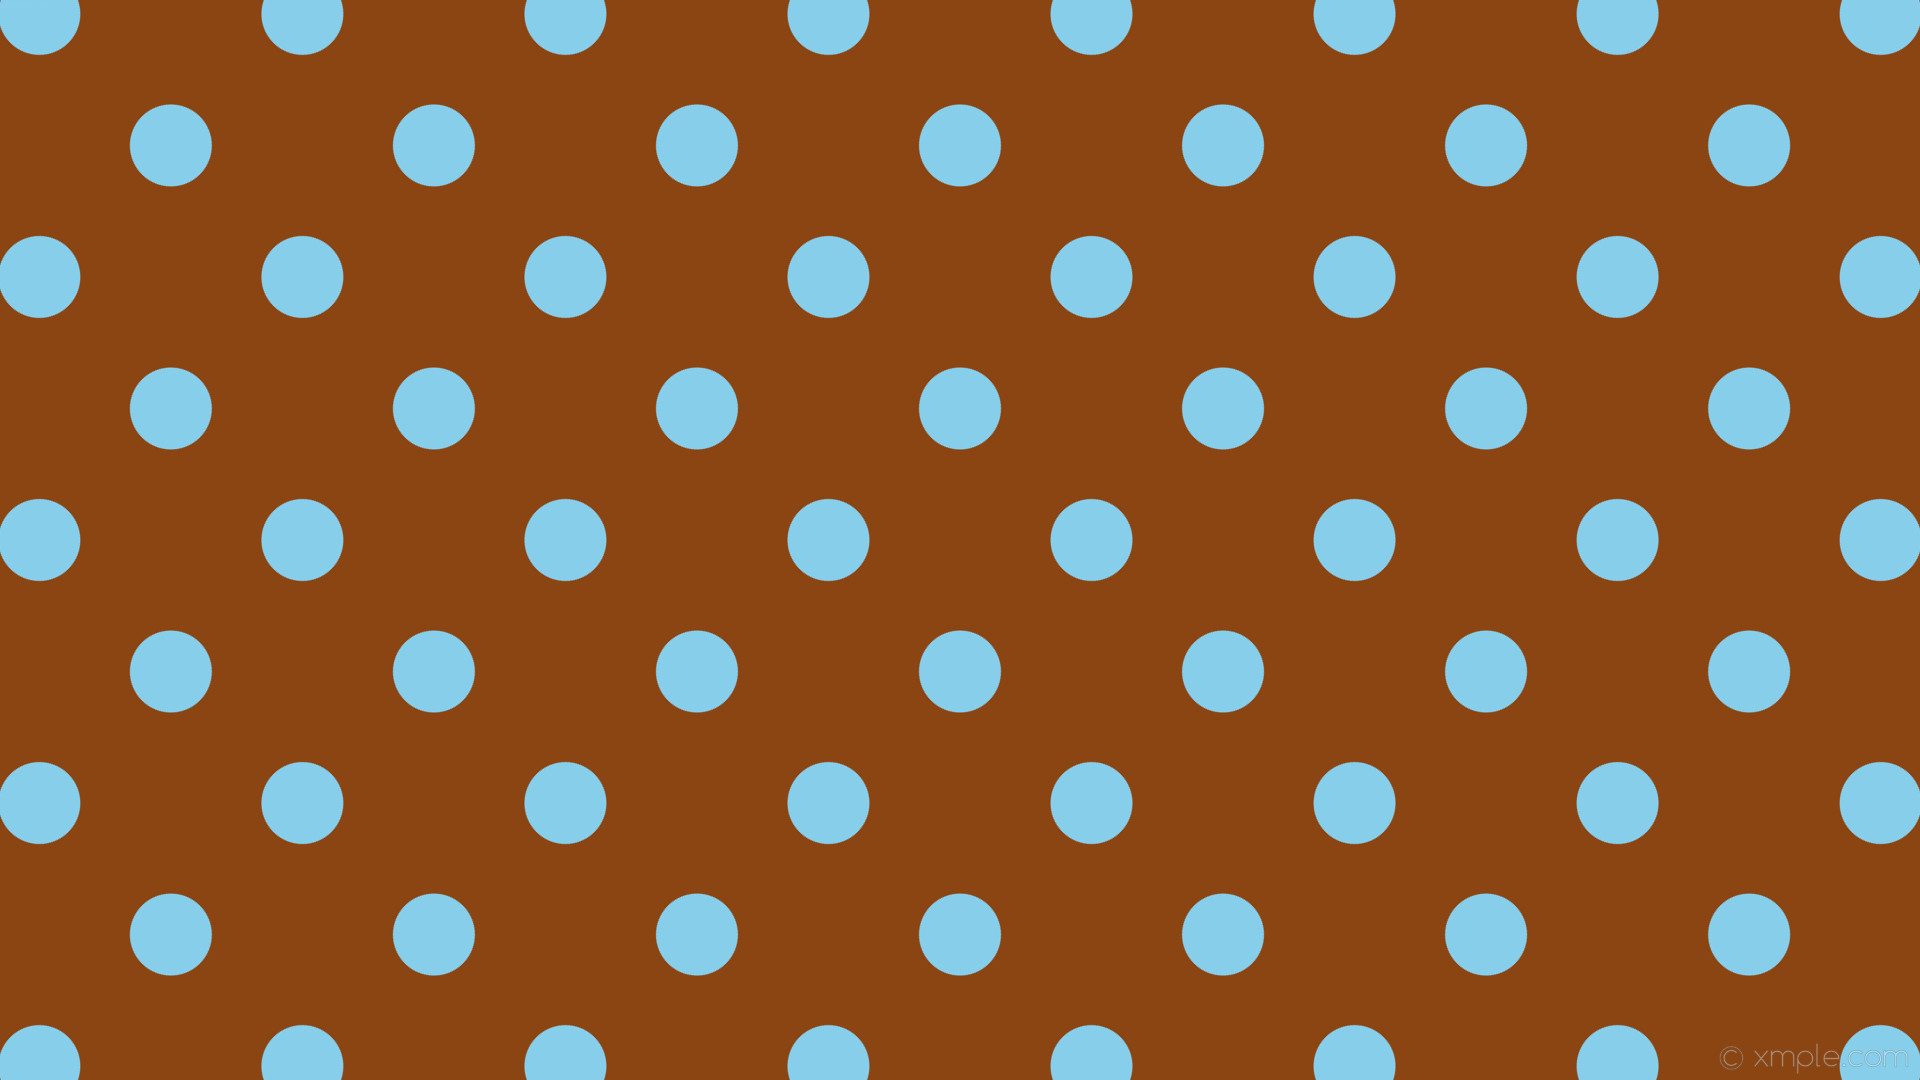 Wallpaper Spots Brown Blue Dots Polka Saddle Brown And White Polka Dots HD Wallpaper